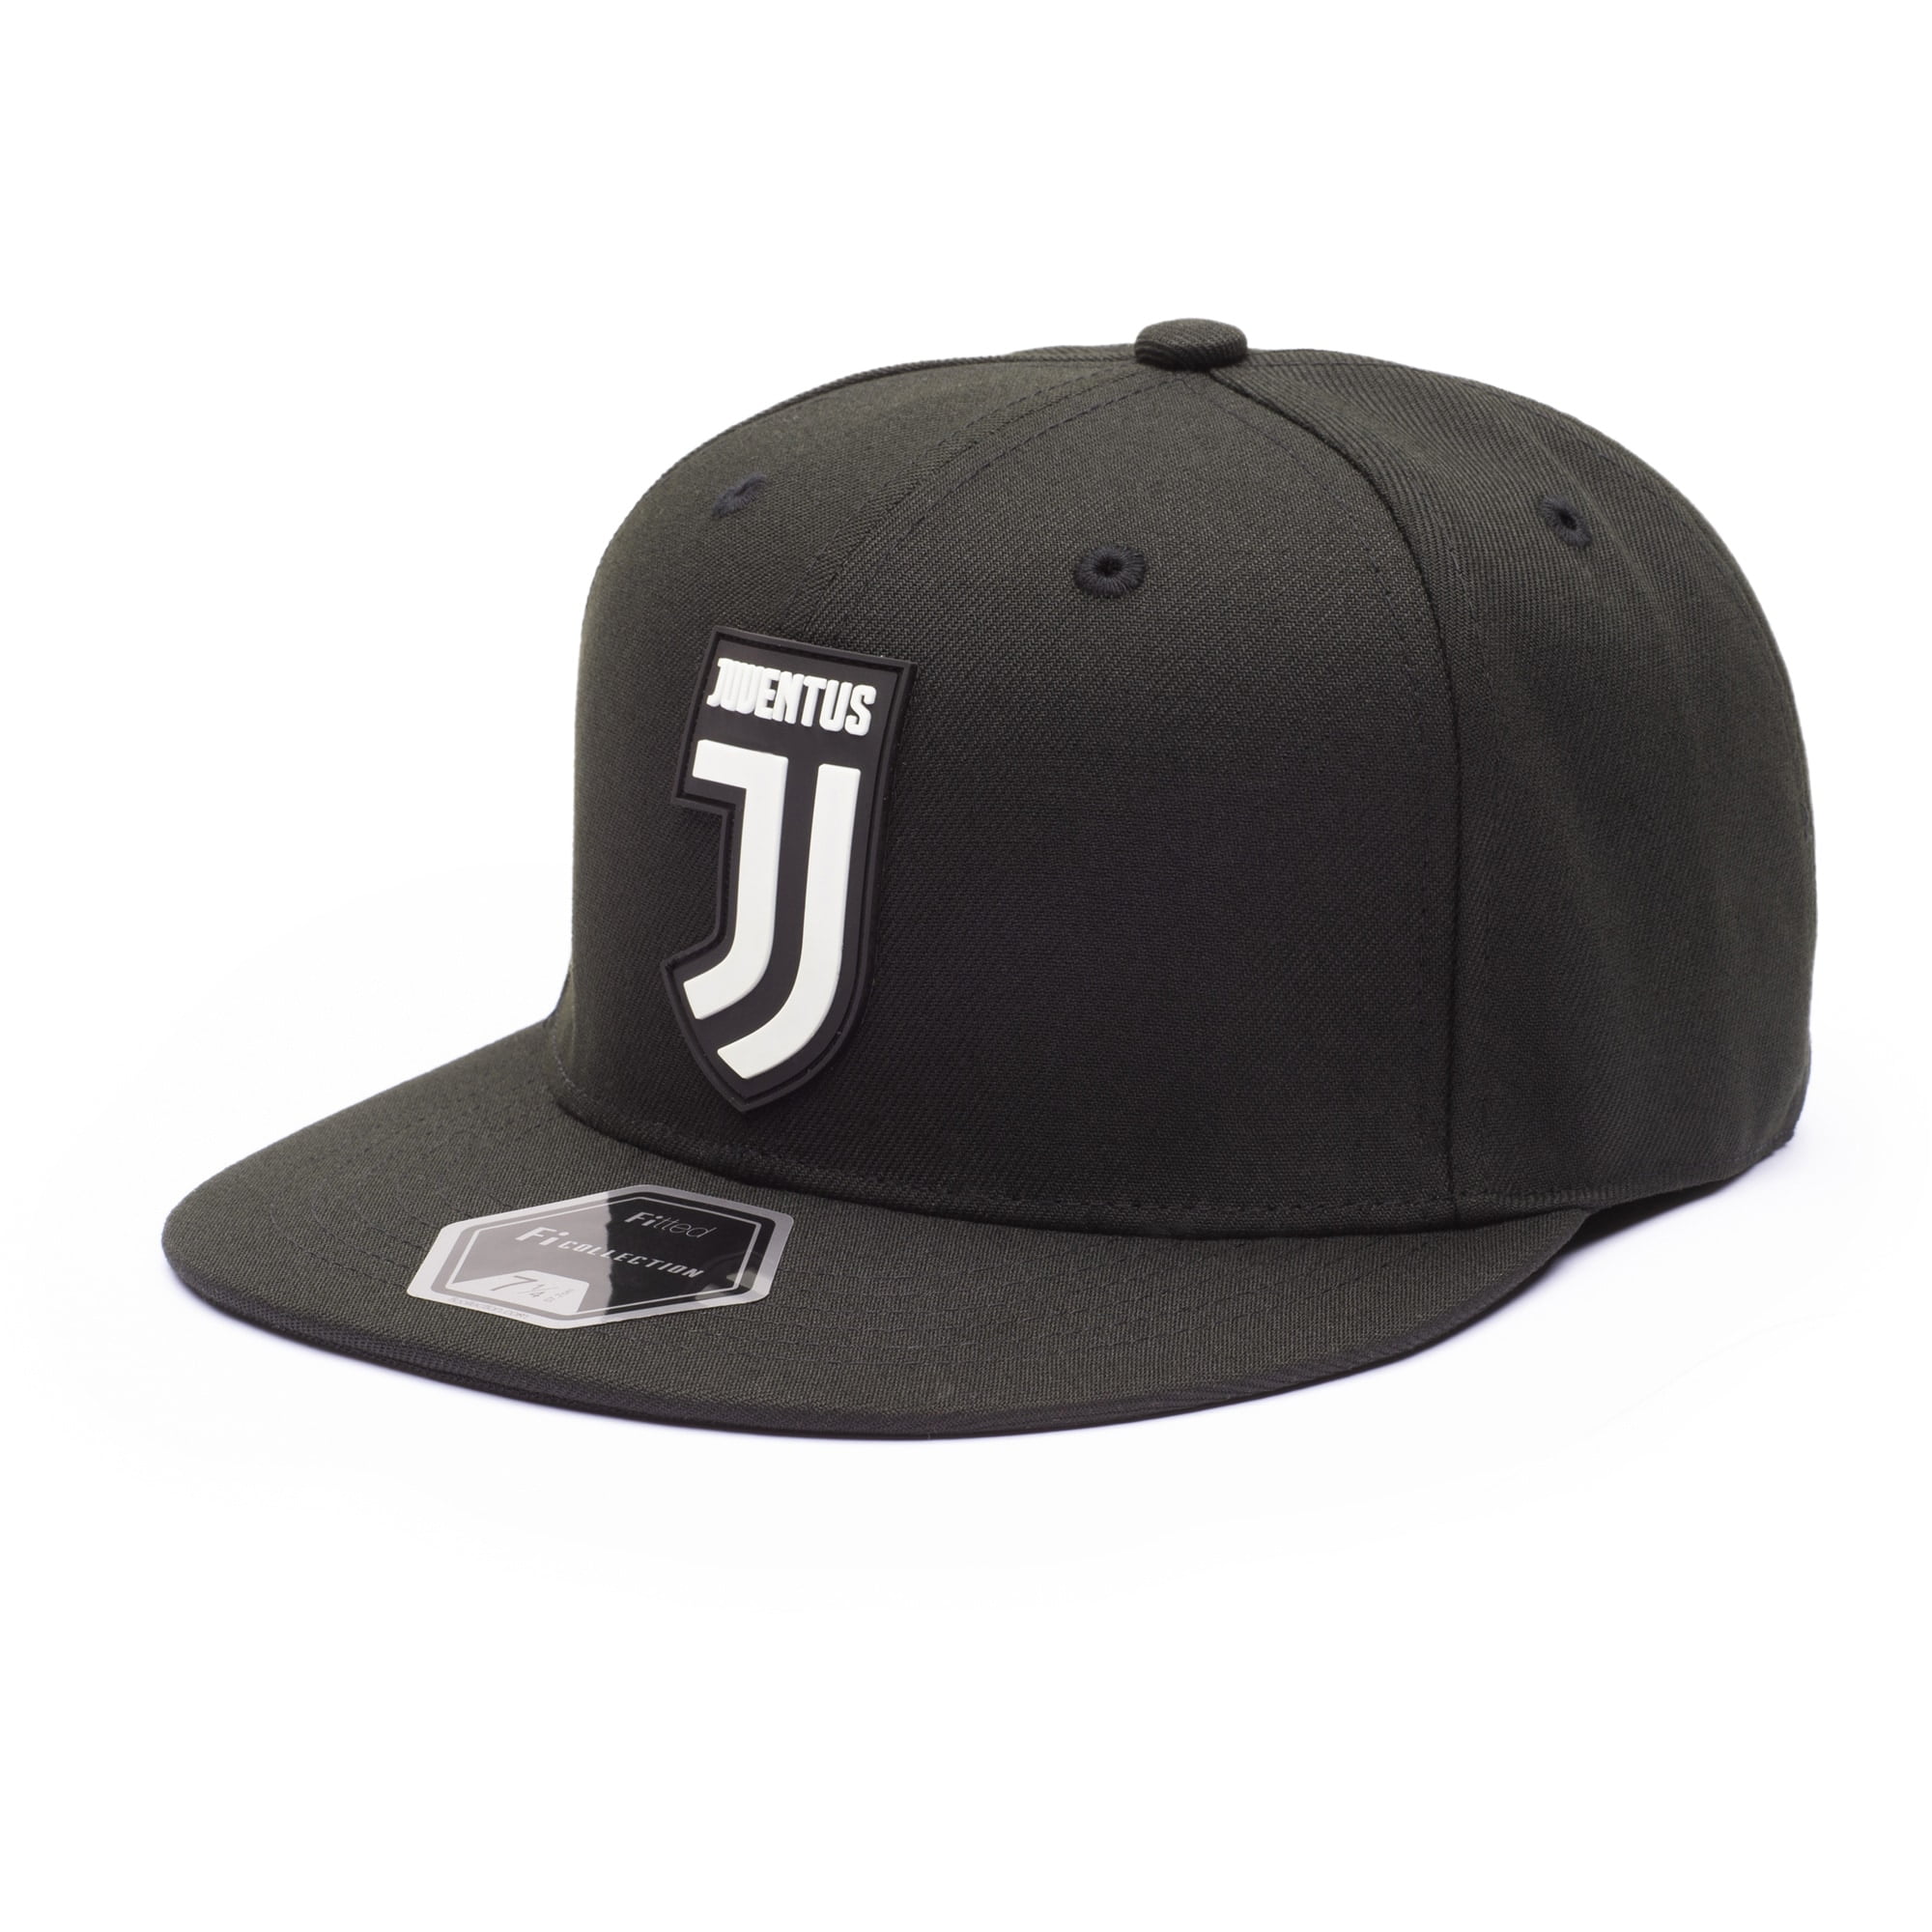 Juventus-Embroidered Authentic Adjustable Baseball Cap New Season White